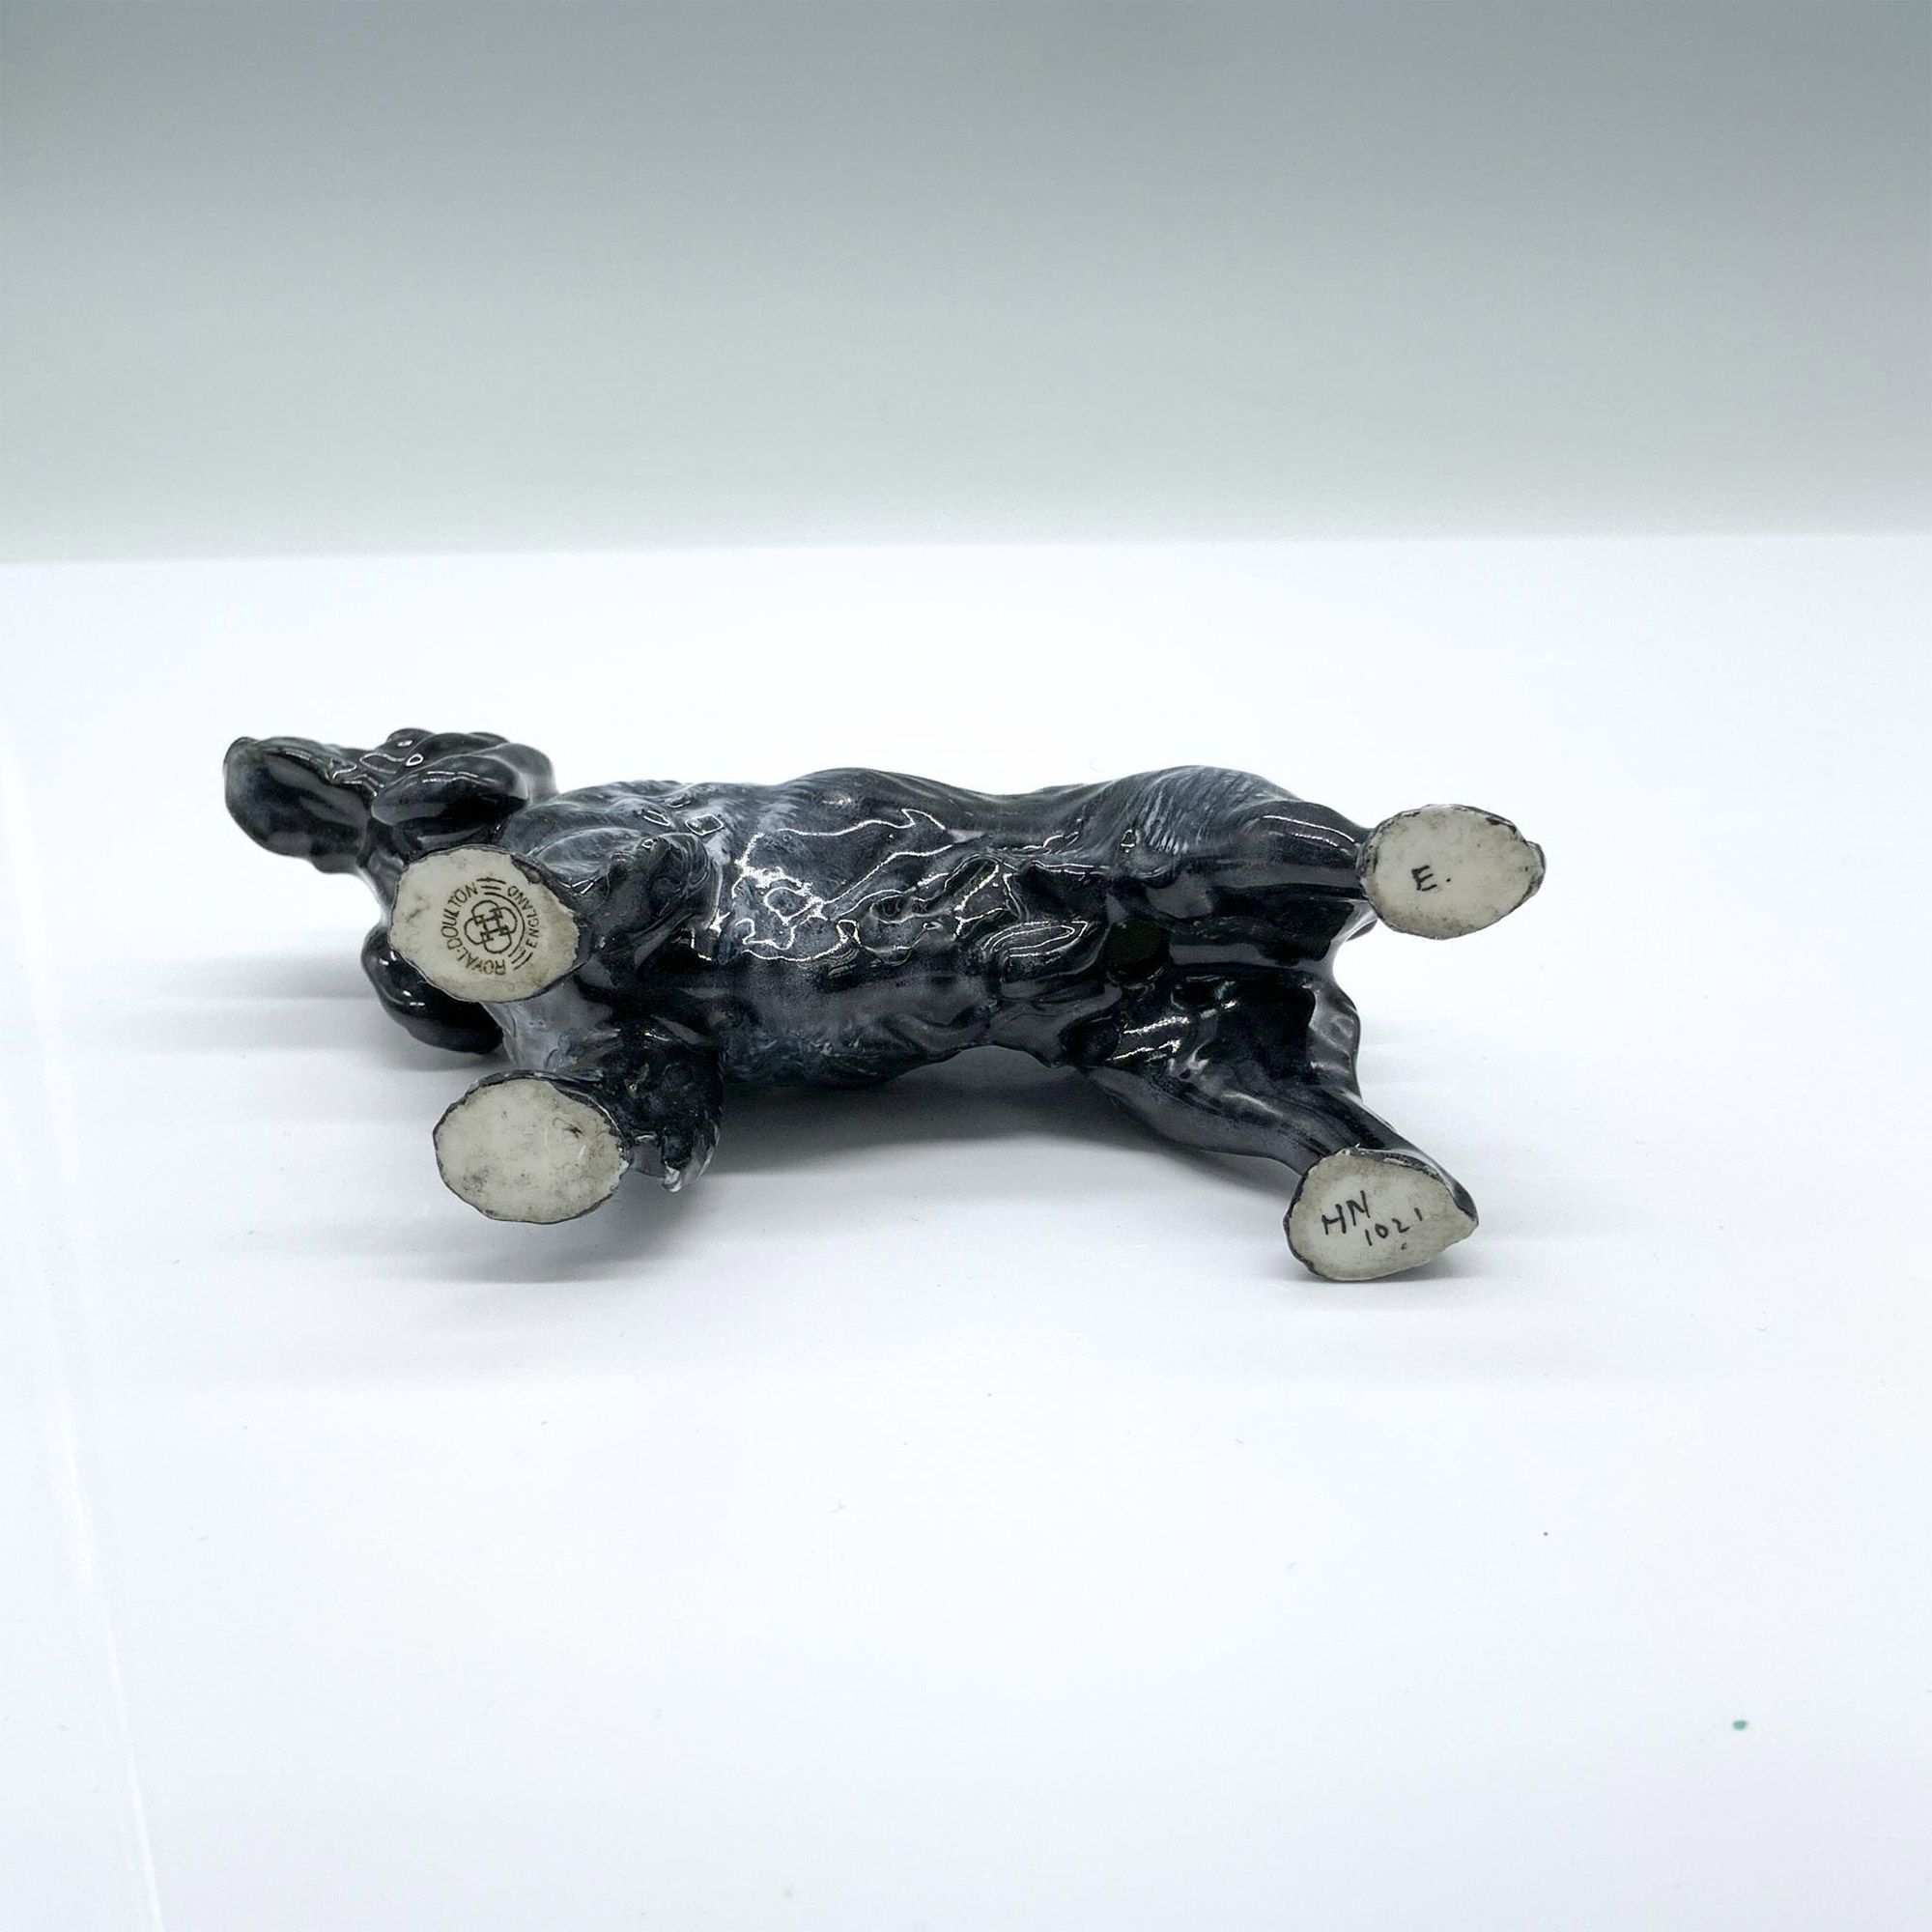 Cocker Spaniel - HN1021 - Royal Doulton Animal Figurine - Image 4 of 4